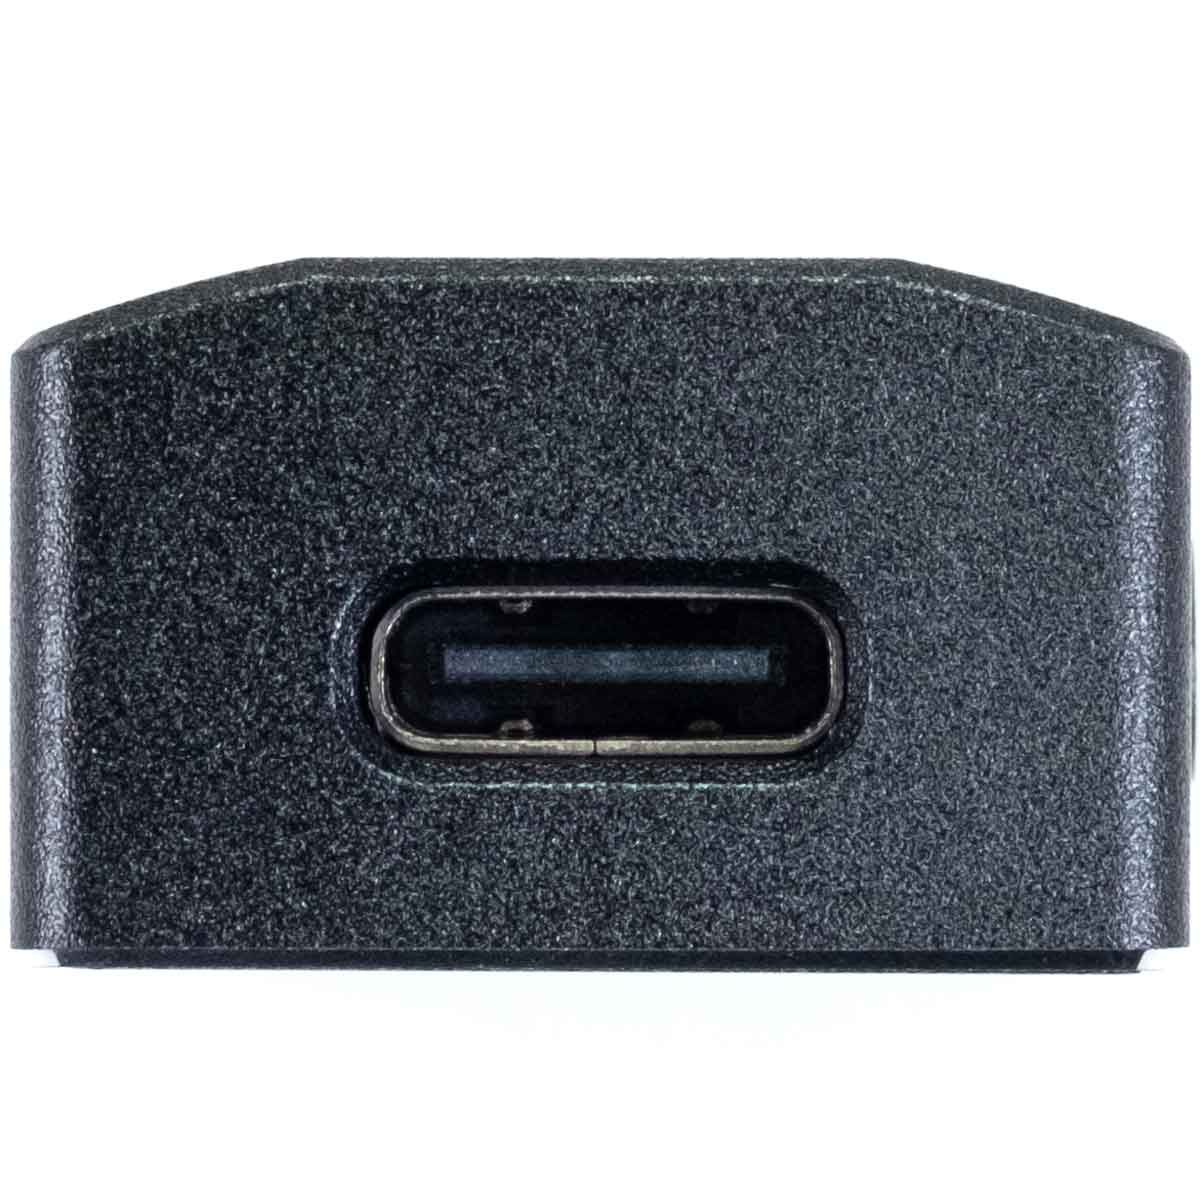 iFi GO Bar Portable Headphone Amp & DAC - side view of input